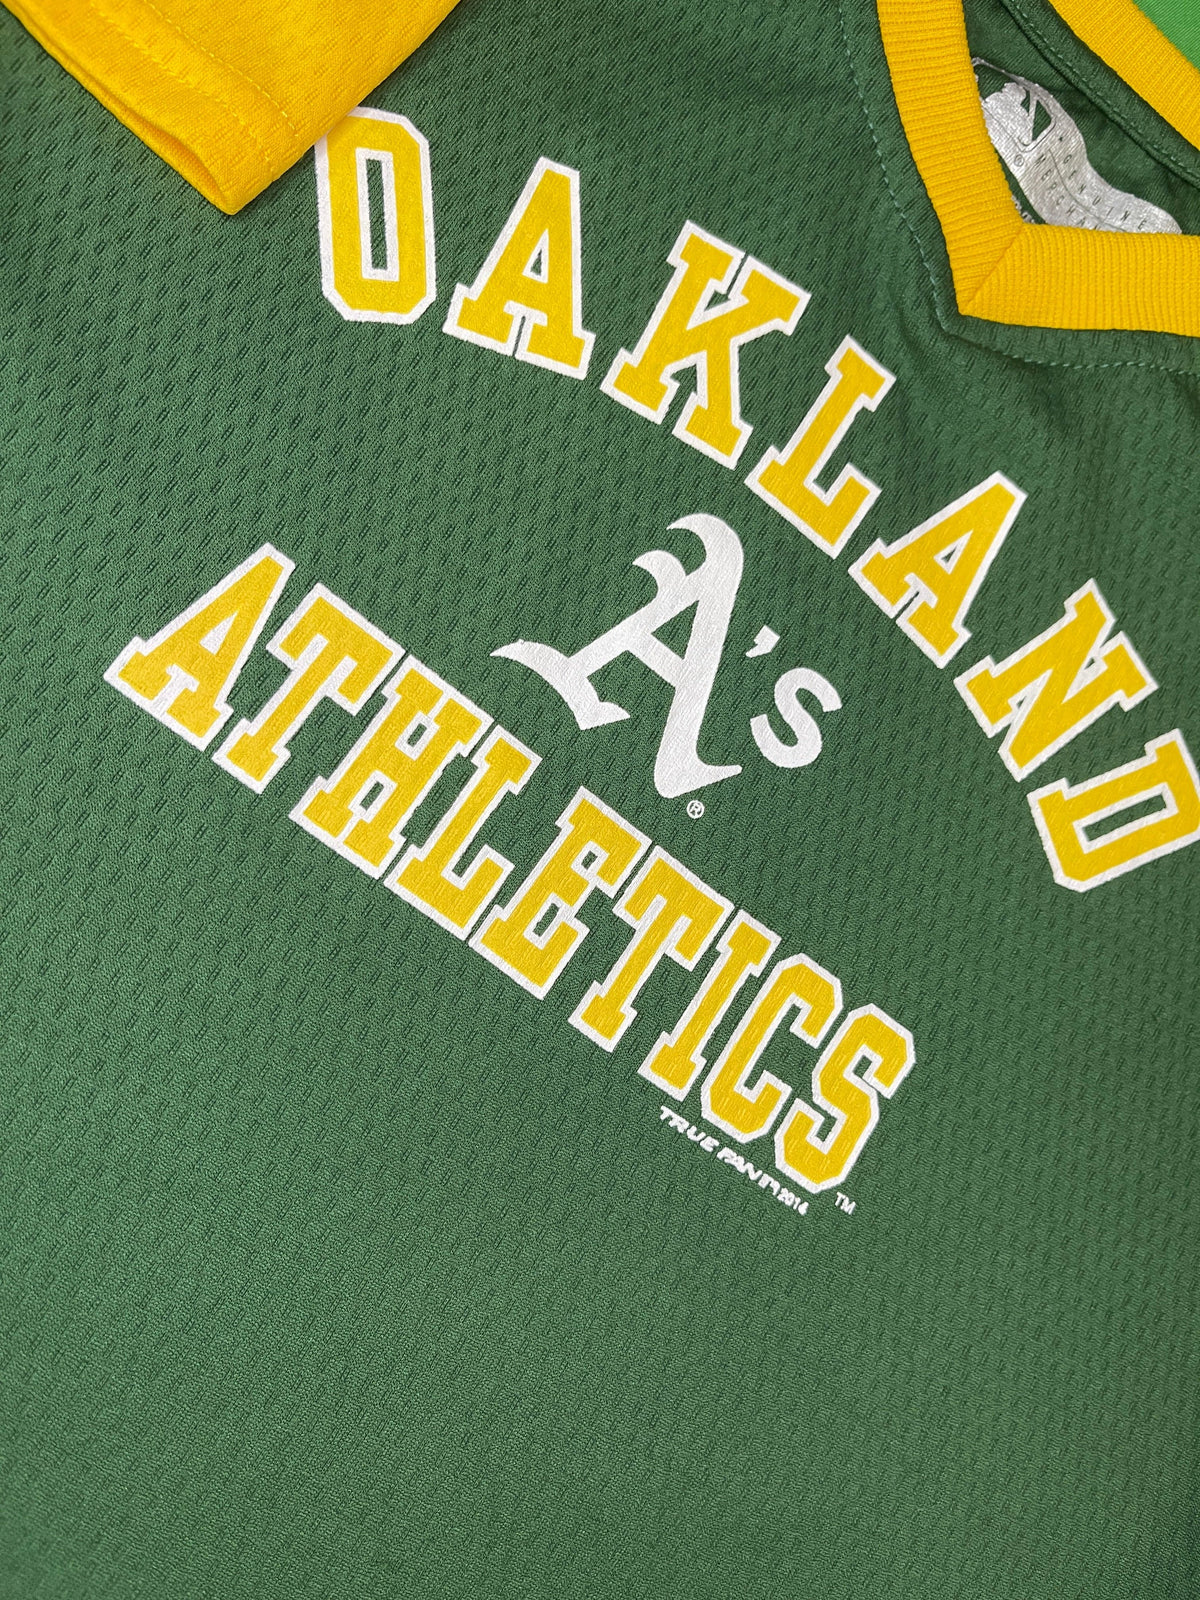 MLB Oakland Athletics A's True Fan Jersey-Style T-Shirt Toddler 4T